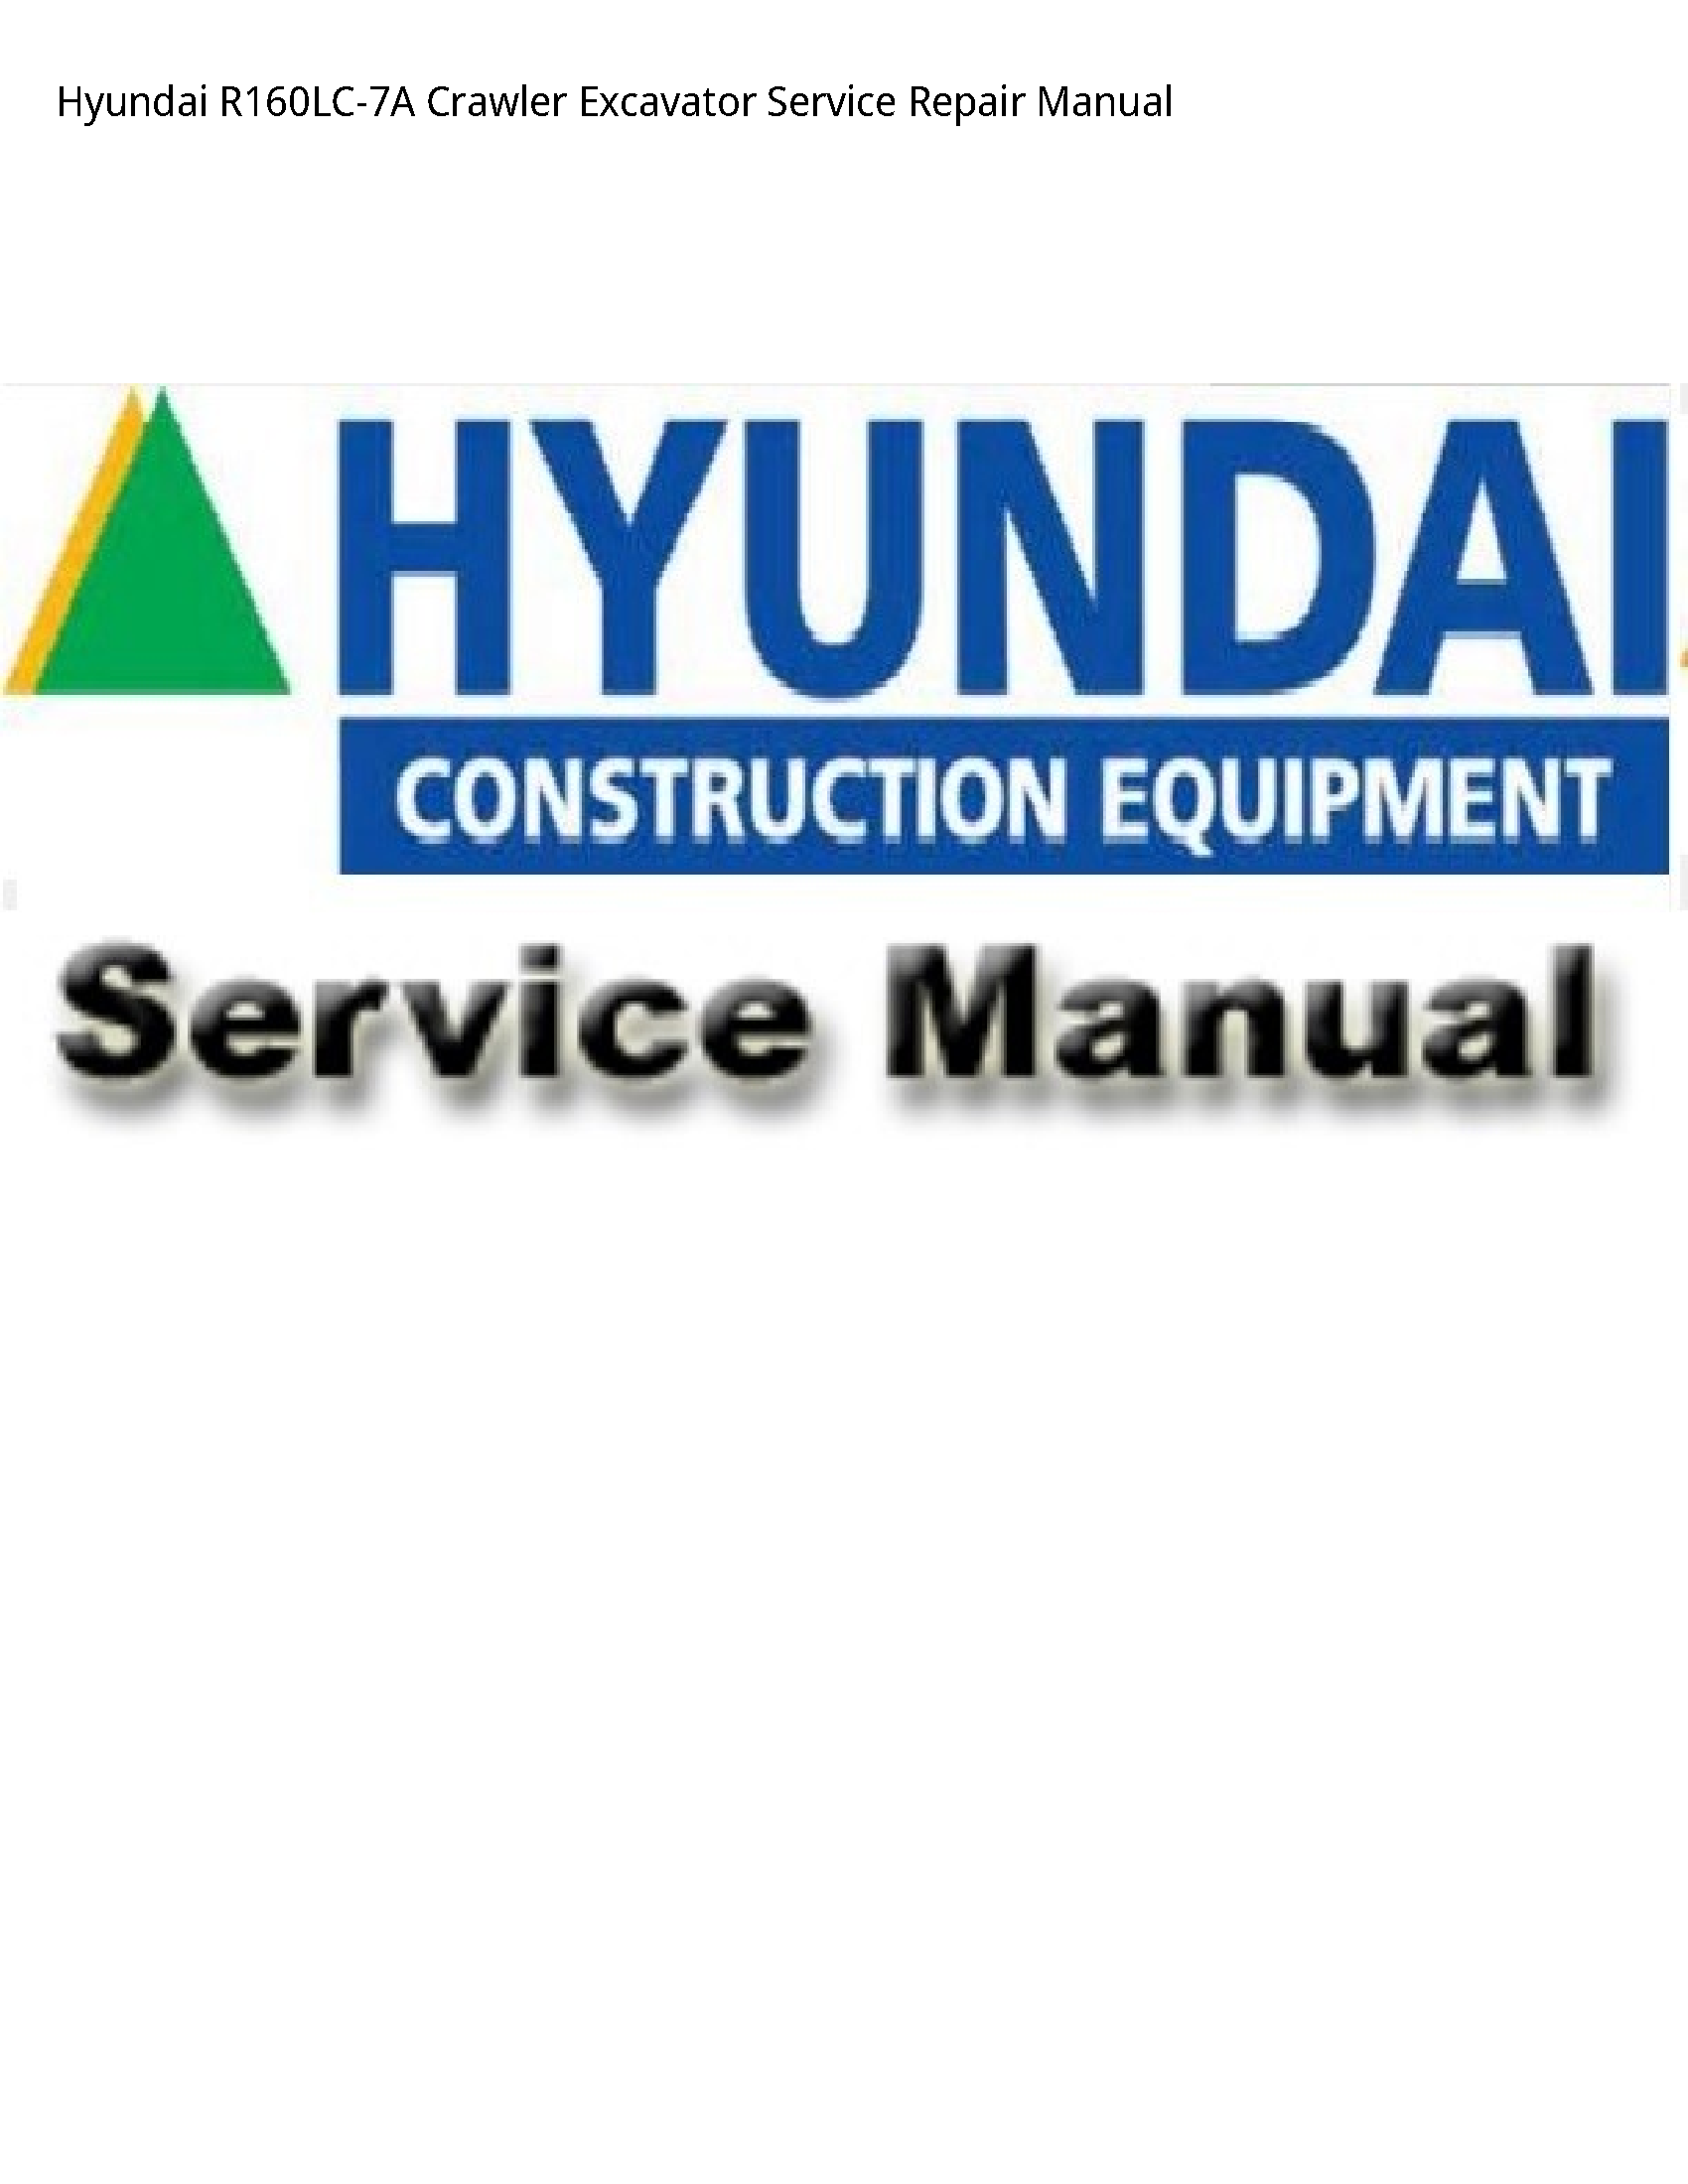 Hyundai R160LC-7A Crawler Excavator manual